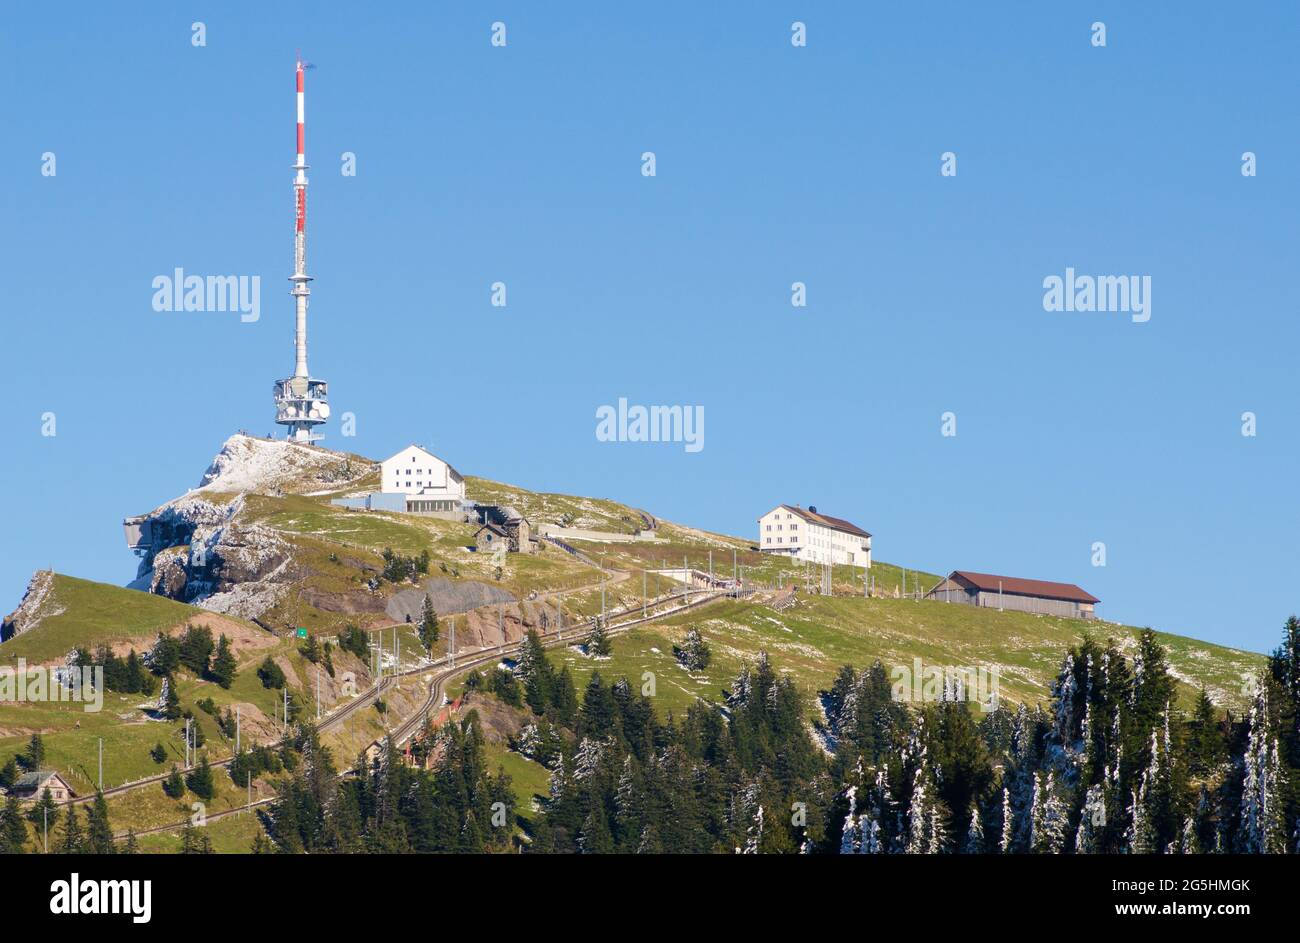 Rigi Kulm summit with railway station and broadcasting or communication mast, Mount Rigi in the Schwyzer Alps, Swiss Alps, Switzerland Stock Photo